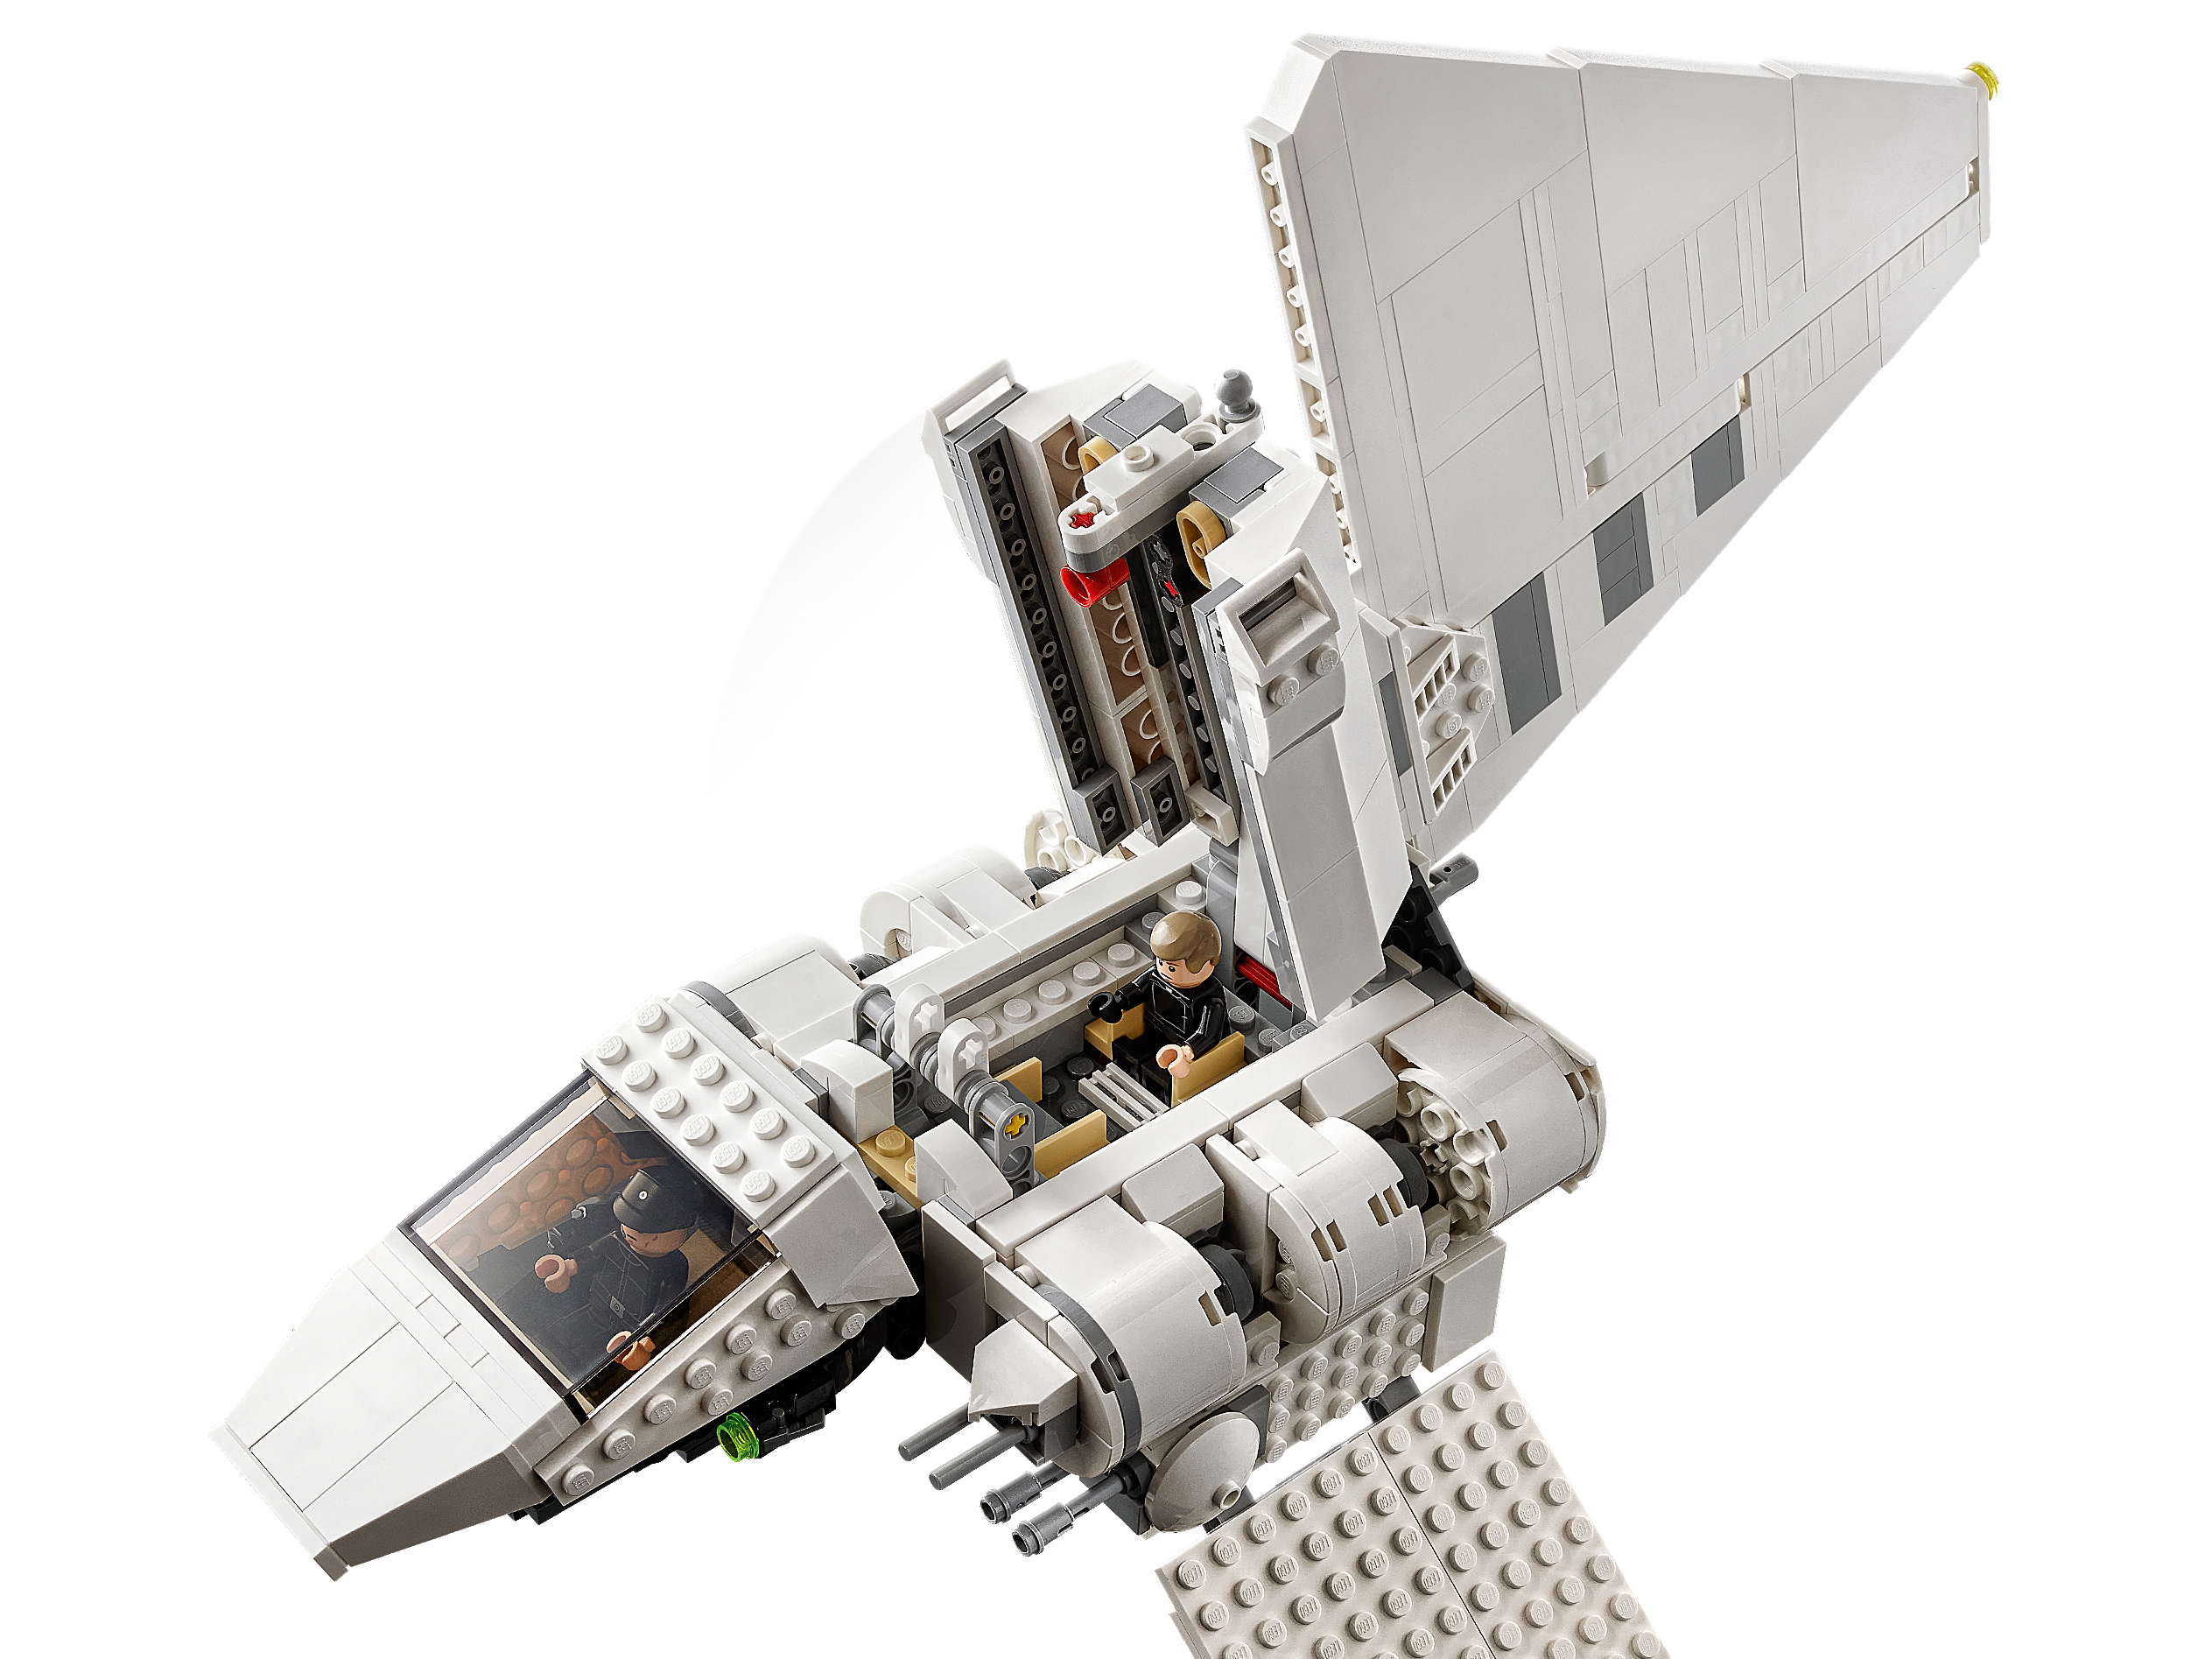 Brand New LEGO Imperial Shuttle STAR WARS TM 75302